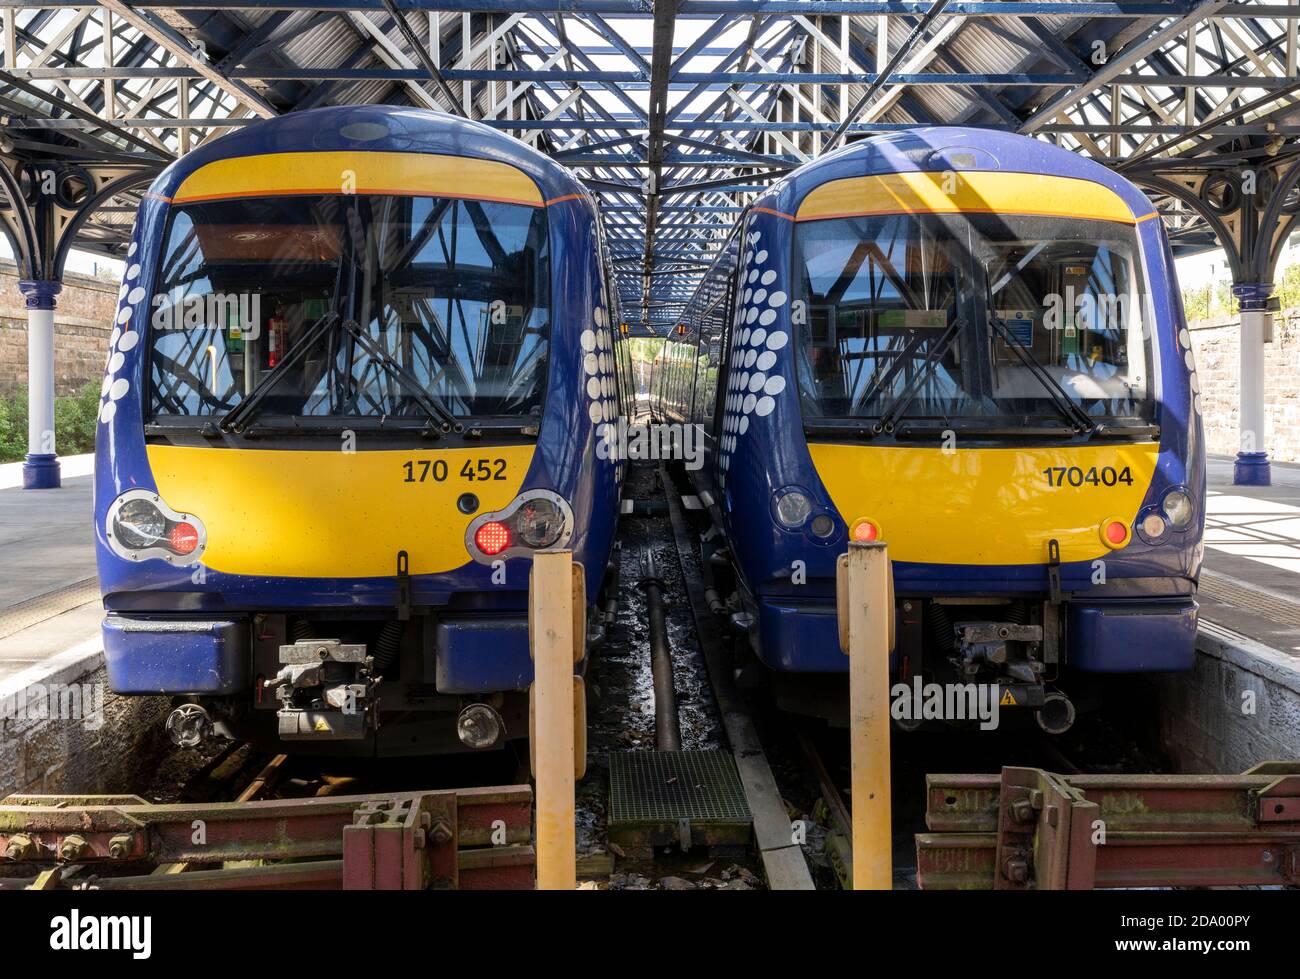 Two British Rail class 170 Turbostar diesel multiple-unit trains of Abellio ScotRail at Glasgow Central Station, Glasgow, Scotland, UK. Stock Photo